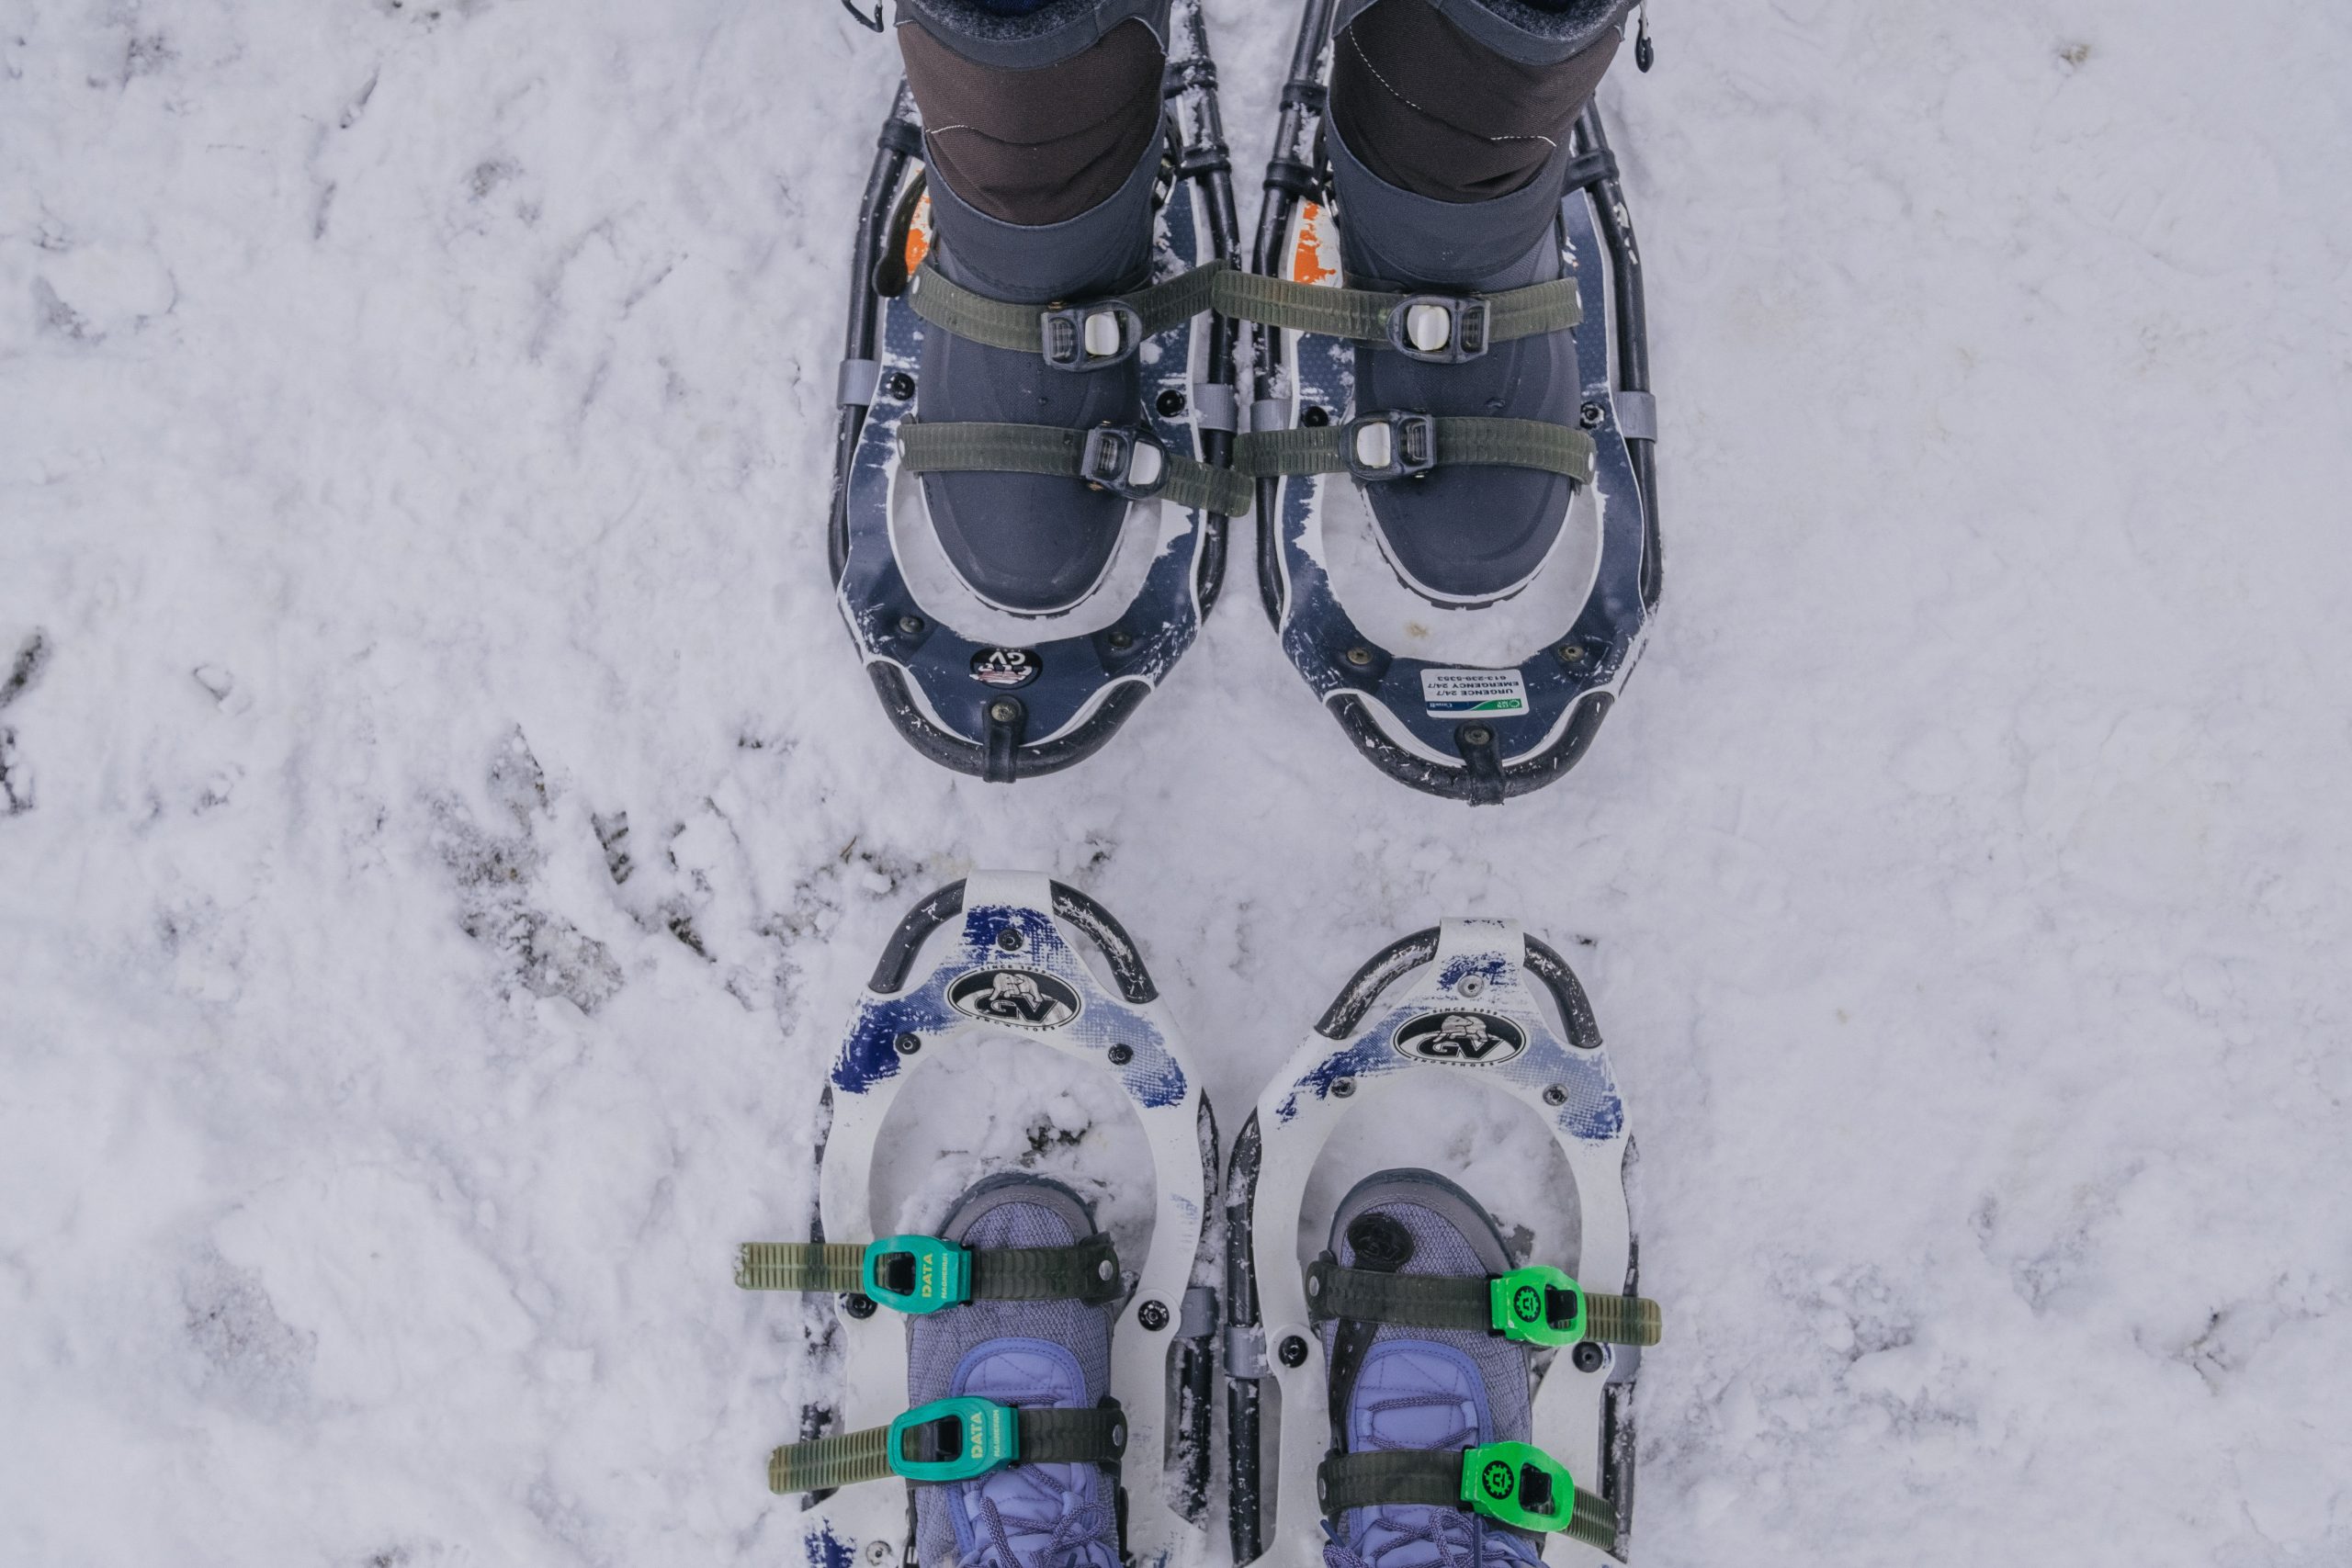 Snow Shoeing in Ottawa in winter